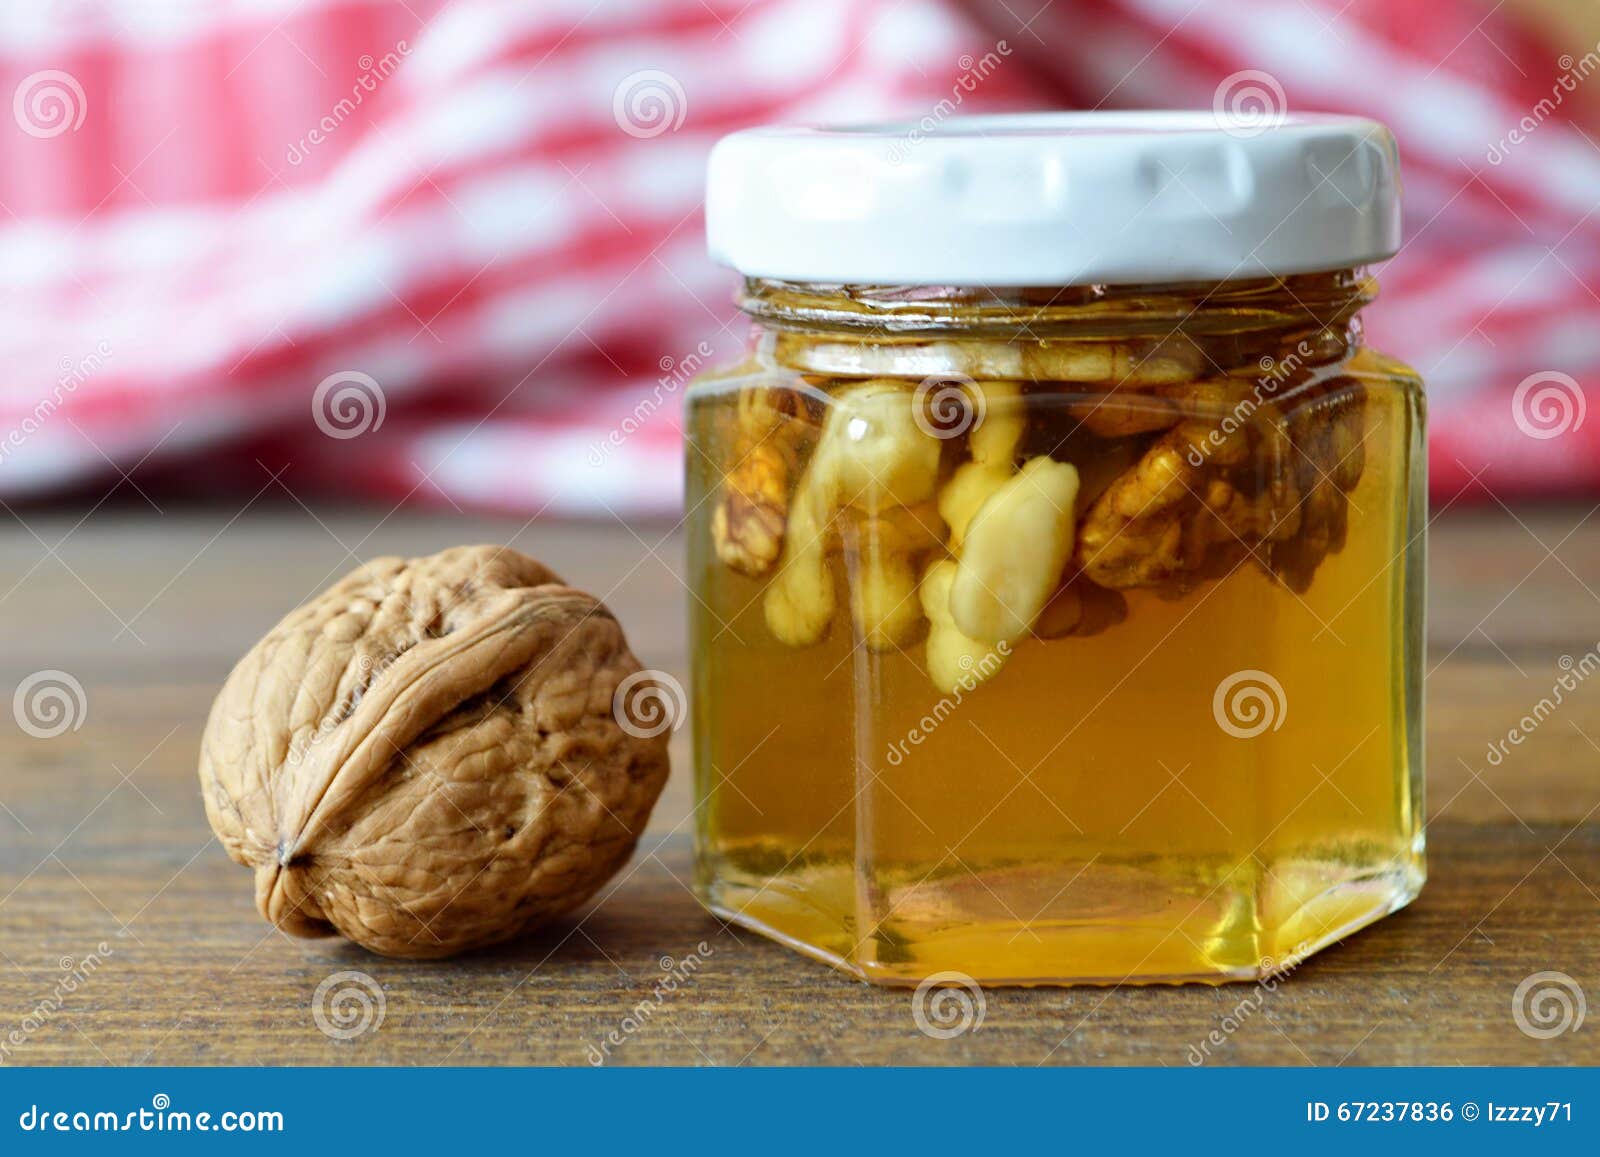 Алоэ мед орехи. Медовый орех. Алоэ мед лимон орехи. Грецкий орех с мёдом. Алоэ с медом и орехами.